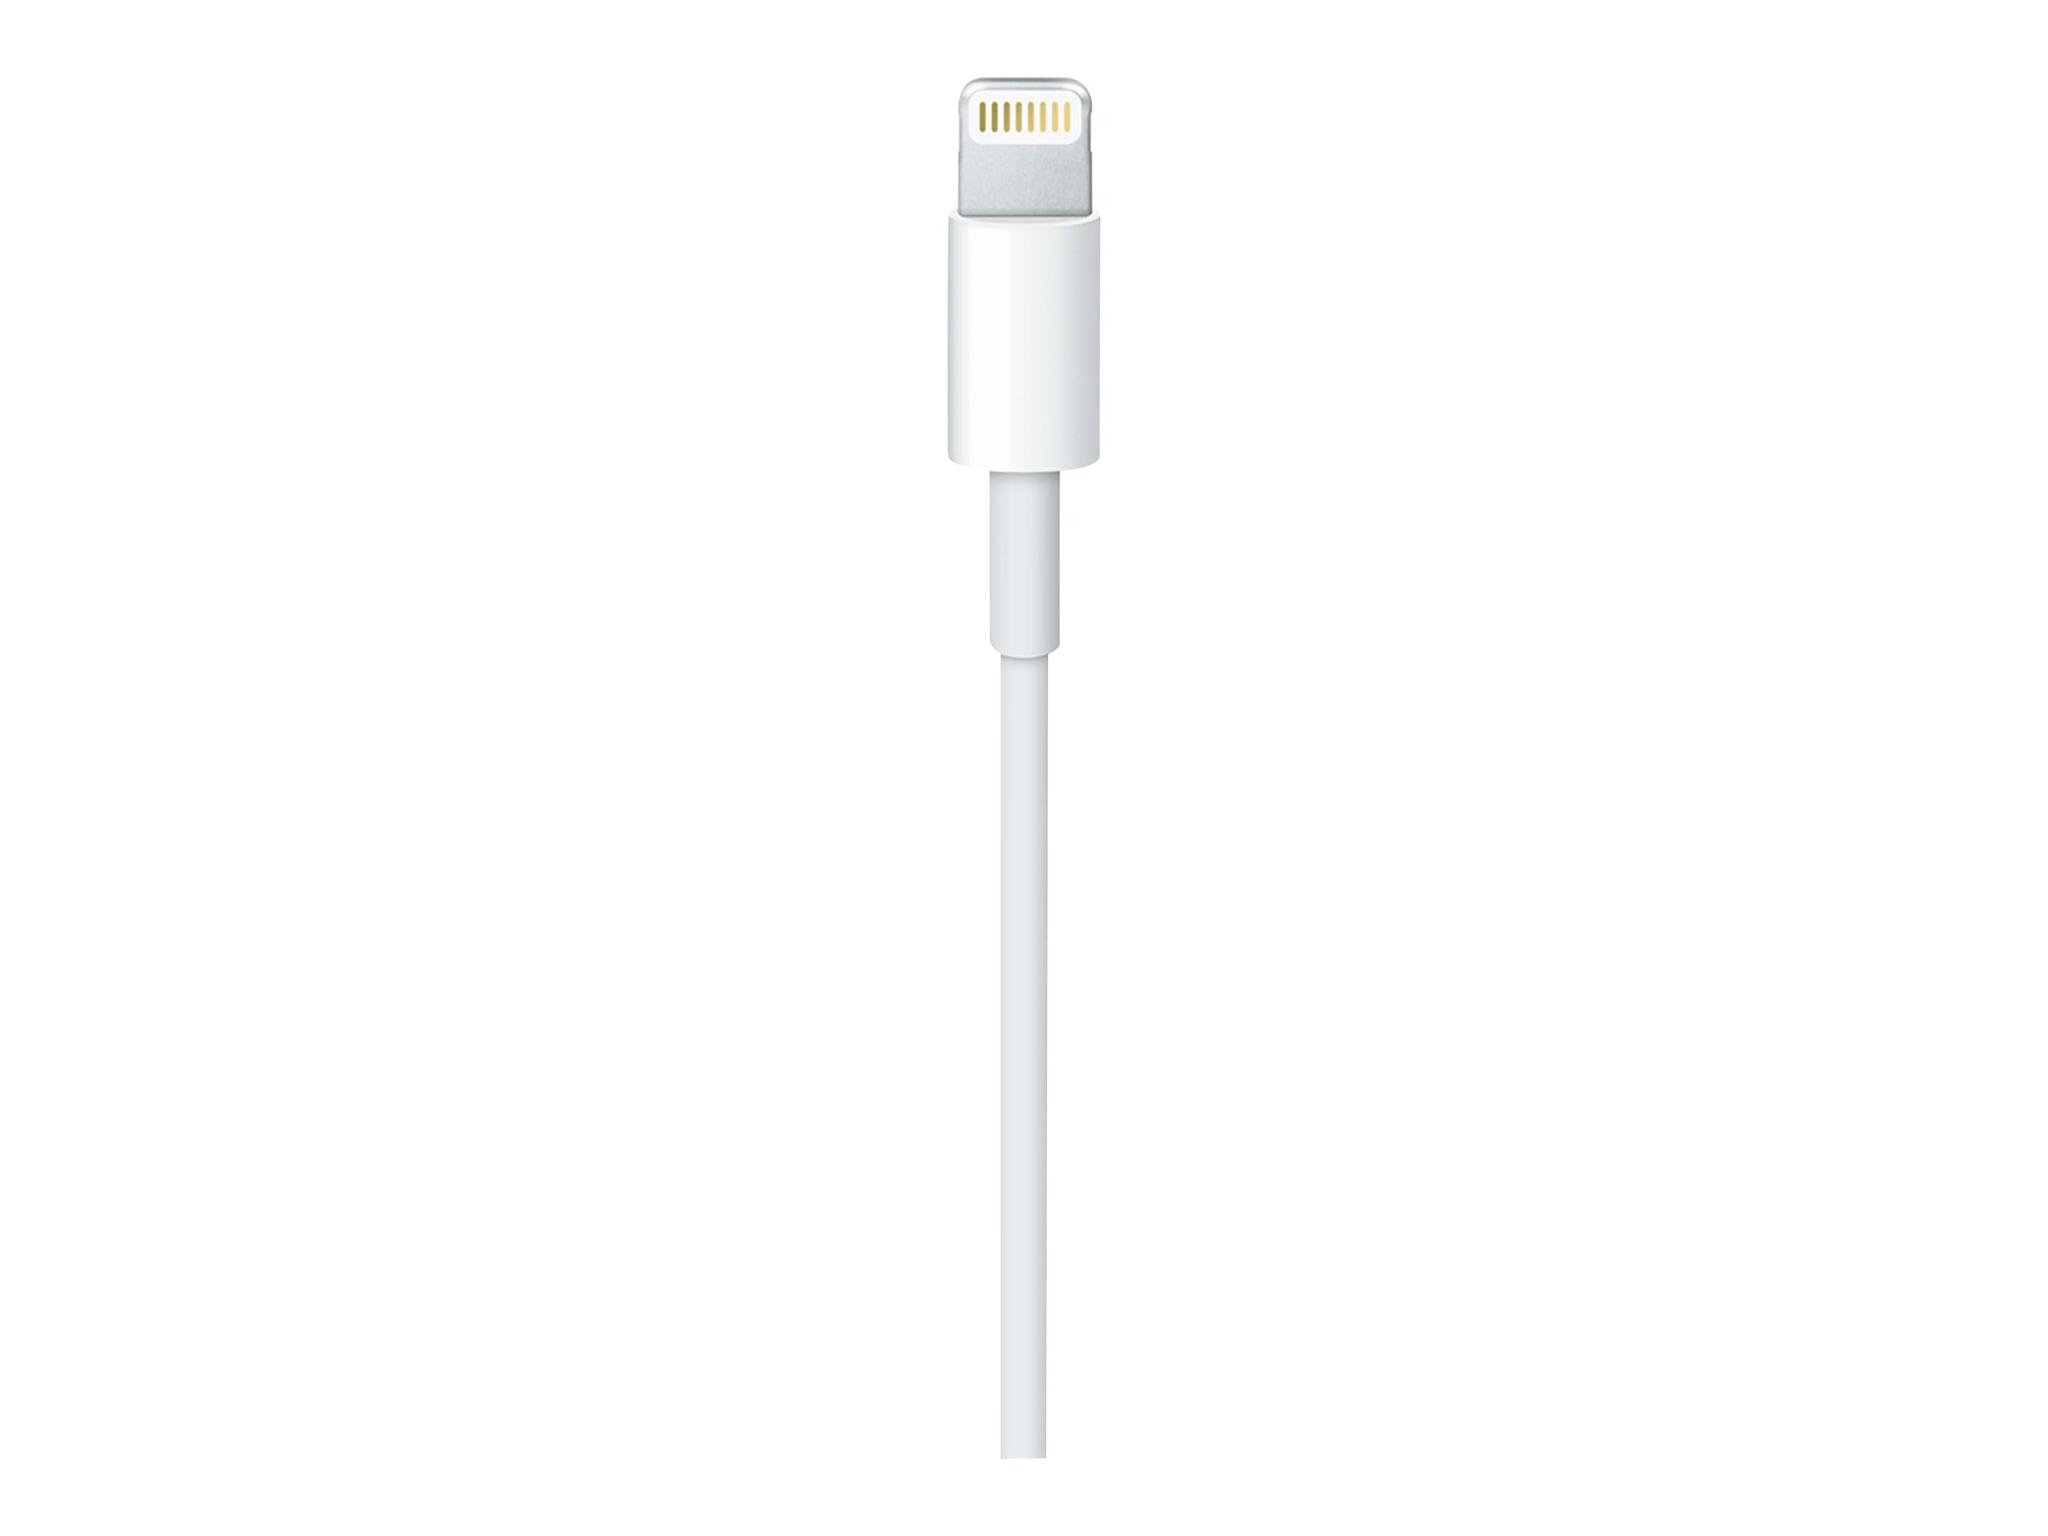 Apple USB-C to Lightning Cable - MX0K2ZM/A